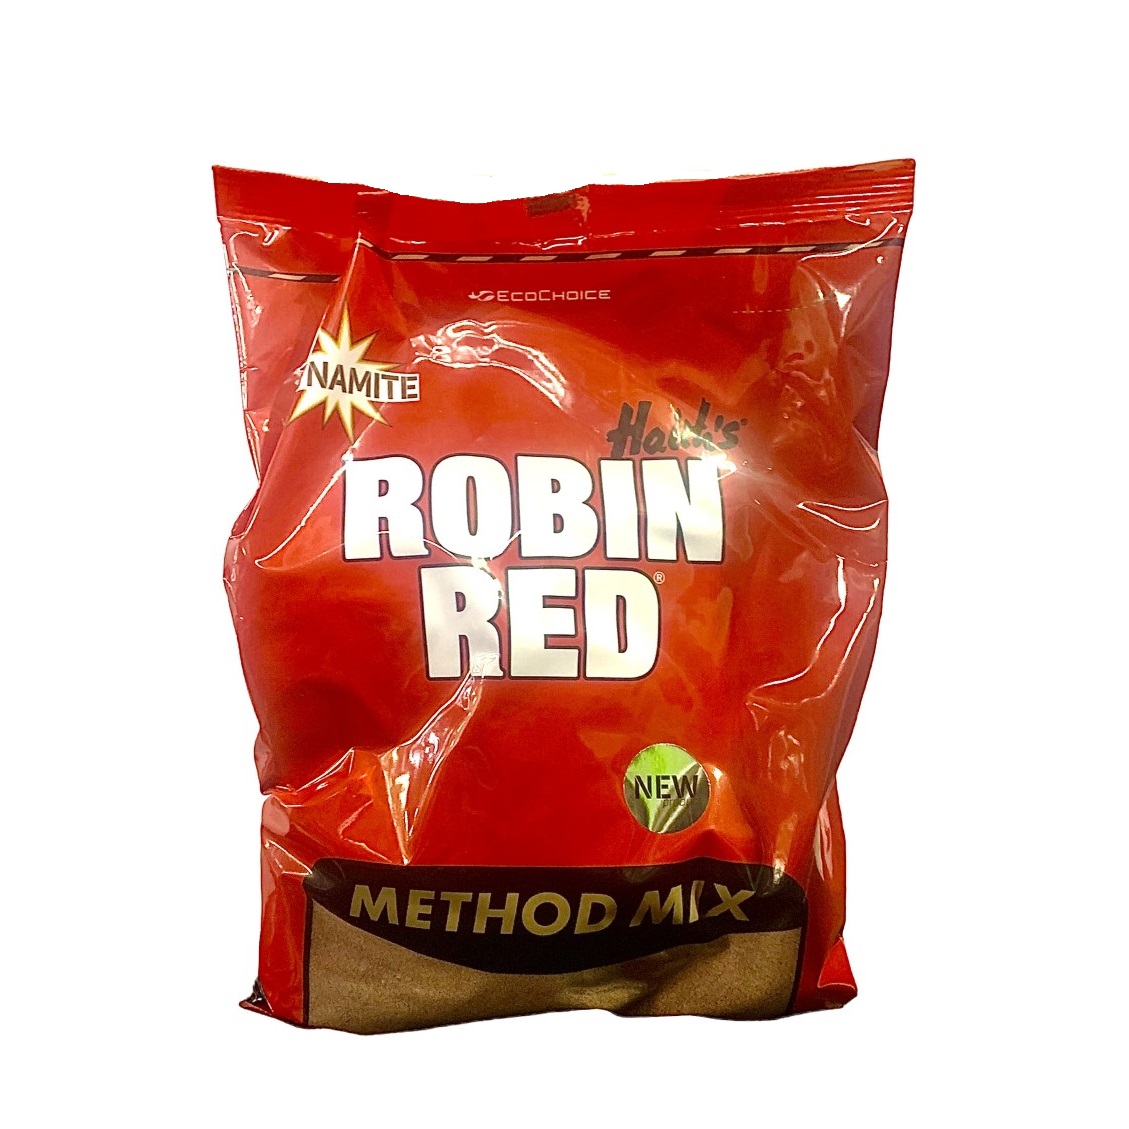 dynamite method mix robin red. elcarpodromo